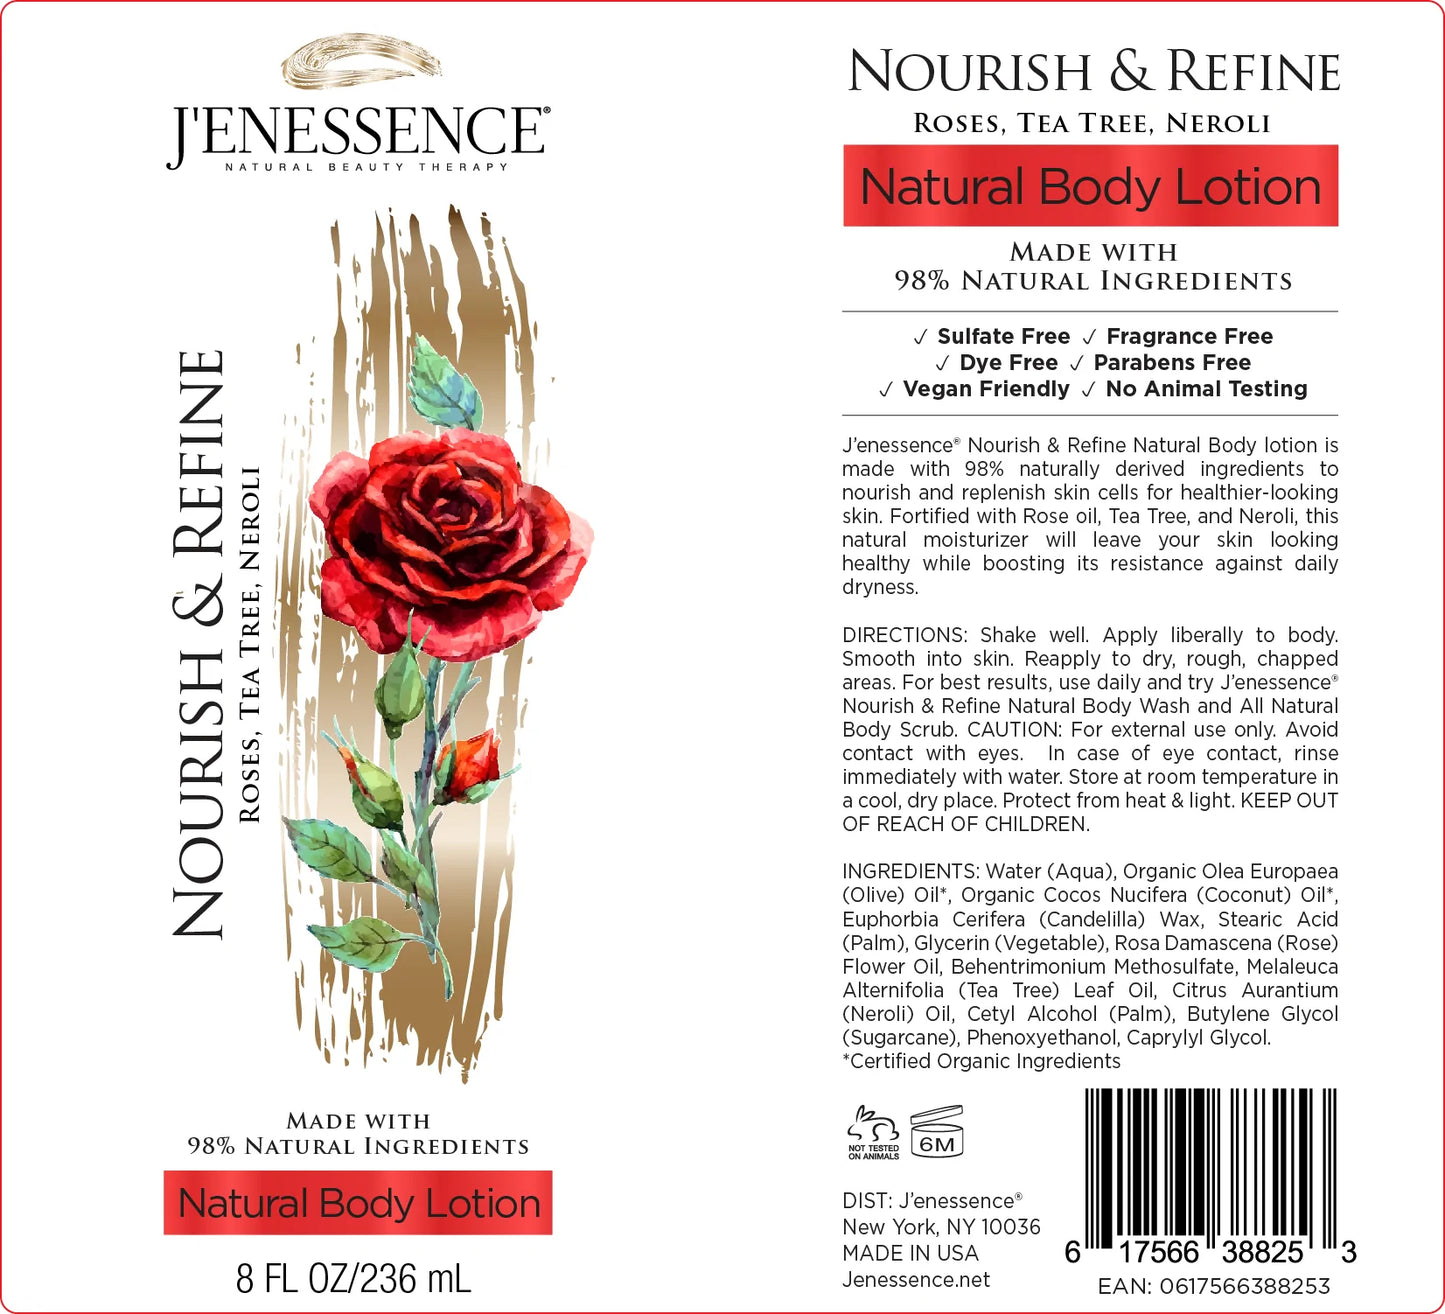 Nourish & Refine 98% Natural Therapeutic Body Lotion (Rose, Neroli, Tea Tree)